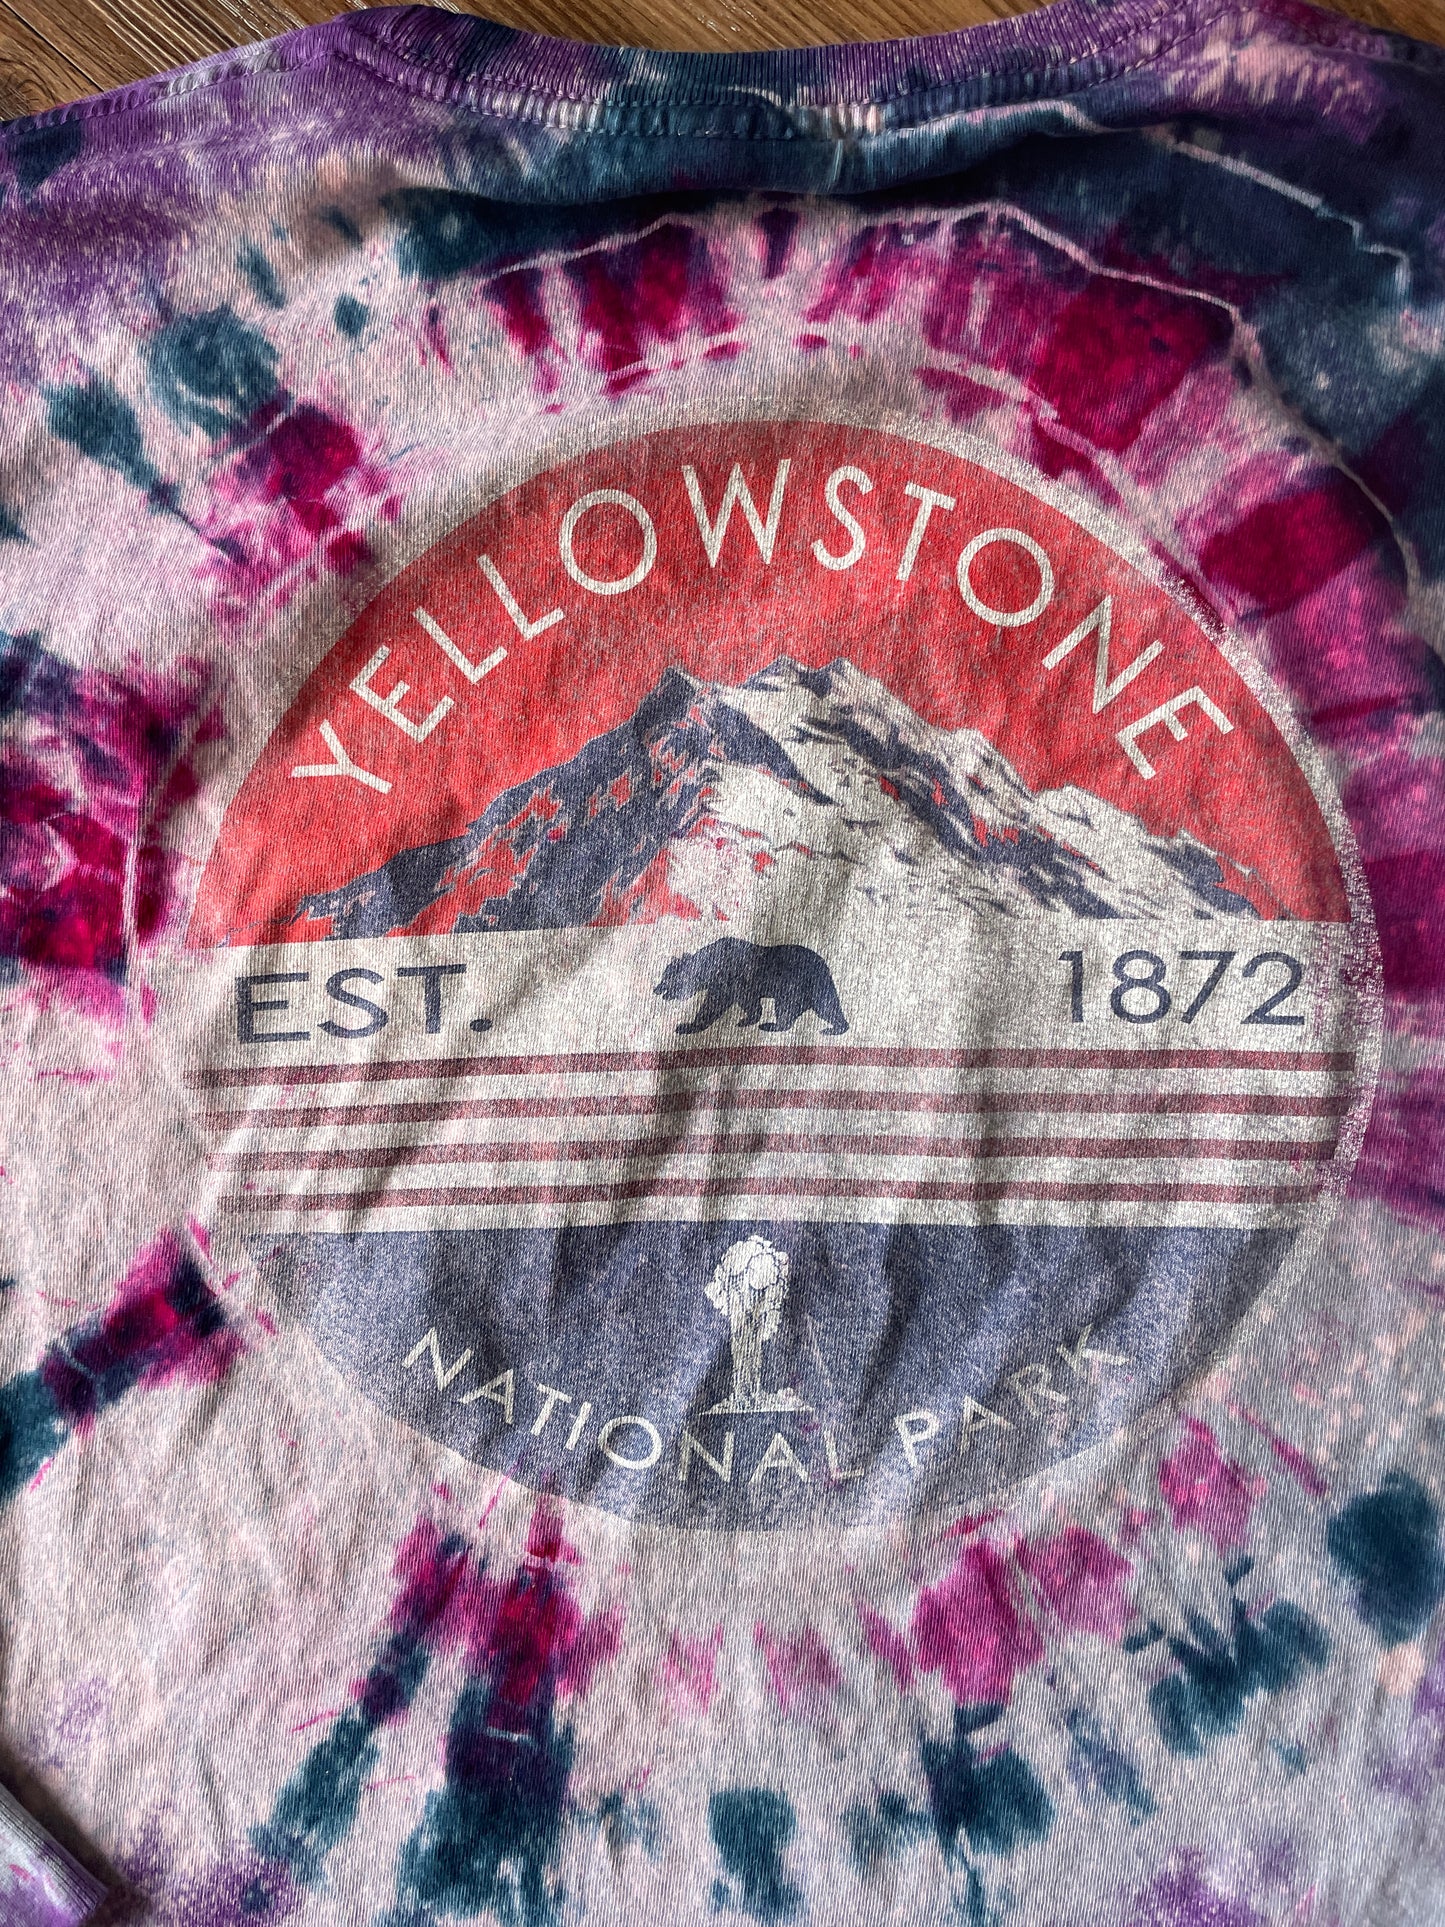 MEDIUM Men’s Yellowstone National Park Handmade Galaxy Geode Tie Dye T-Shirt | Blue, Purple, and Pink Long Sleeve Tee